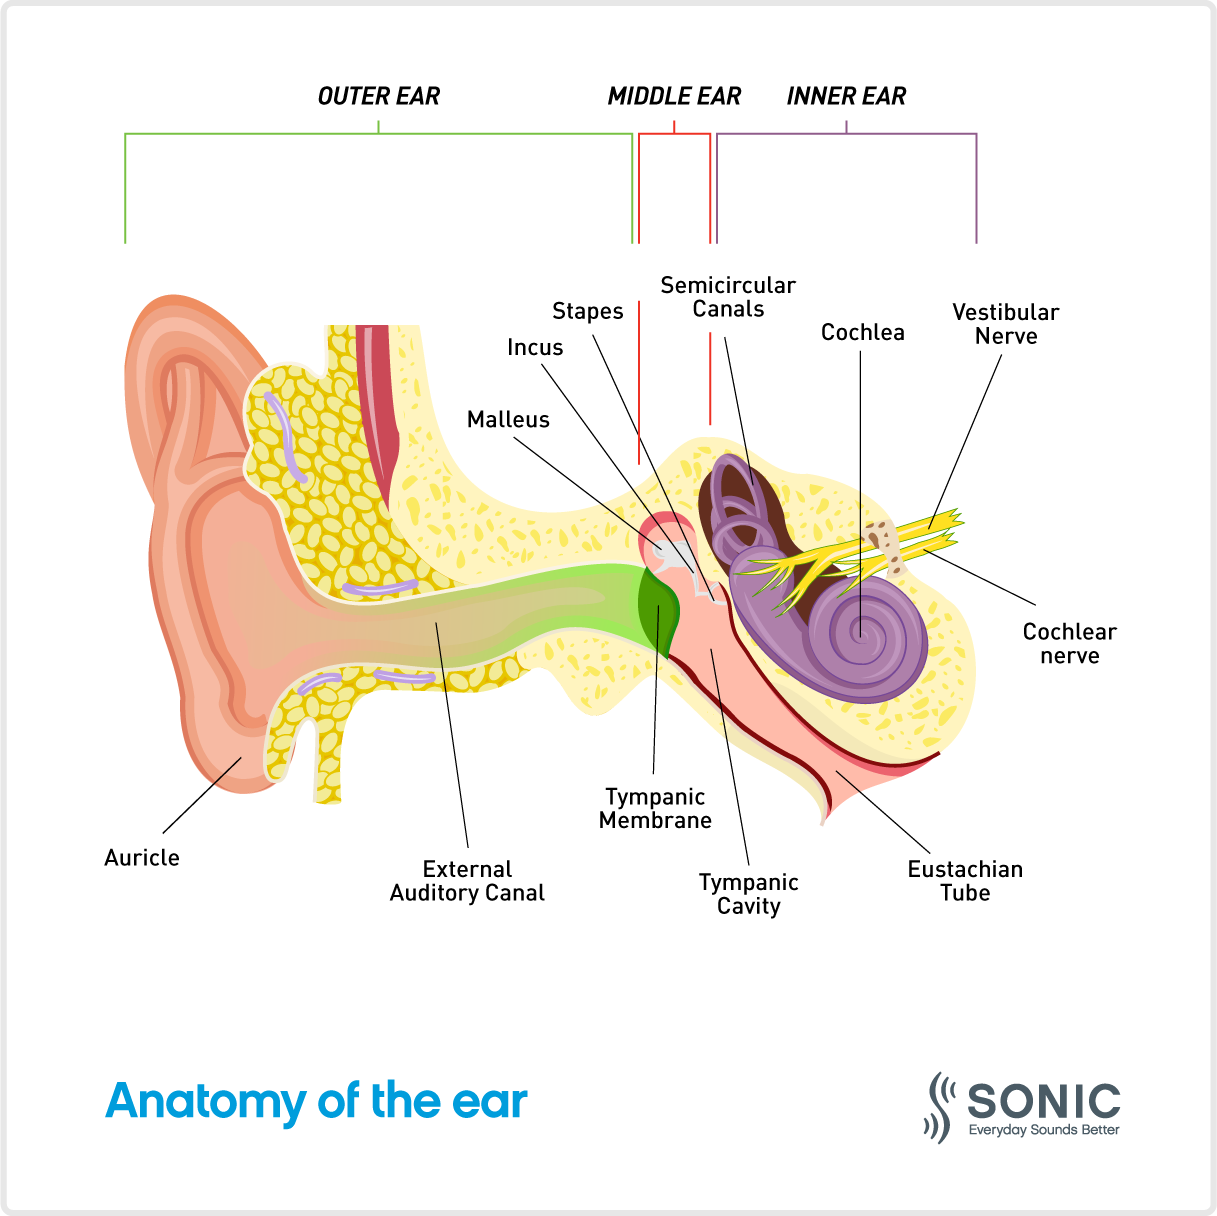 anatomy-of-the-ear